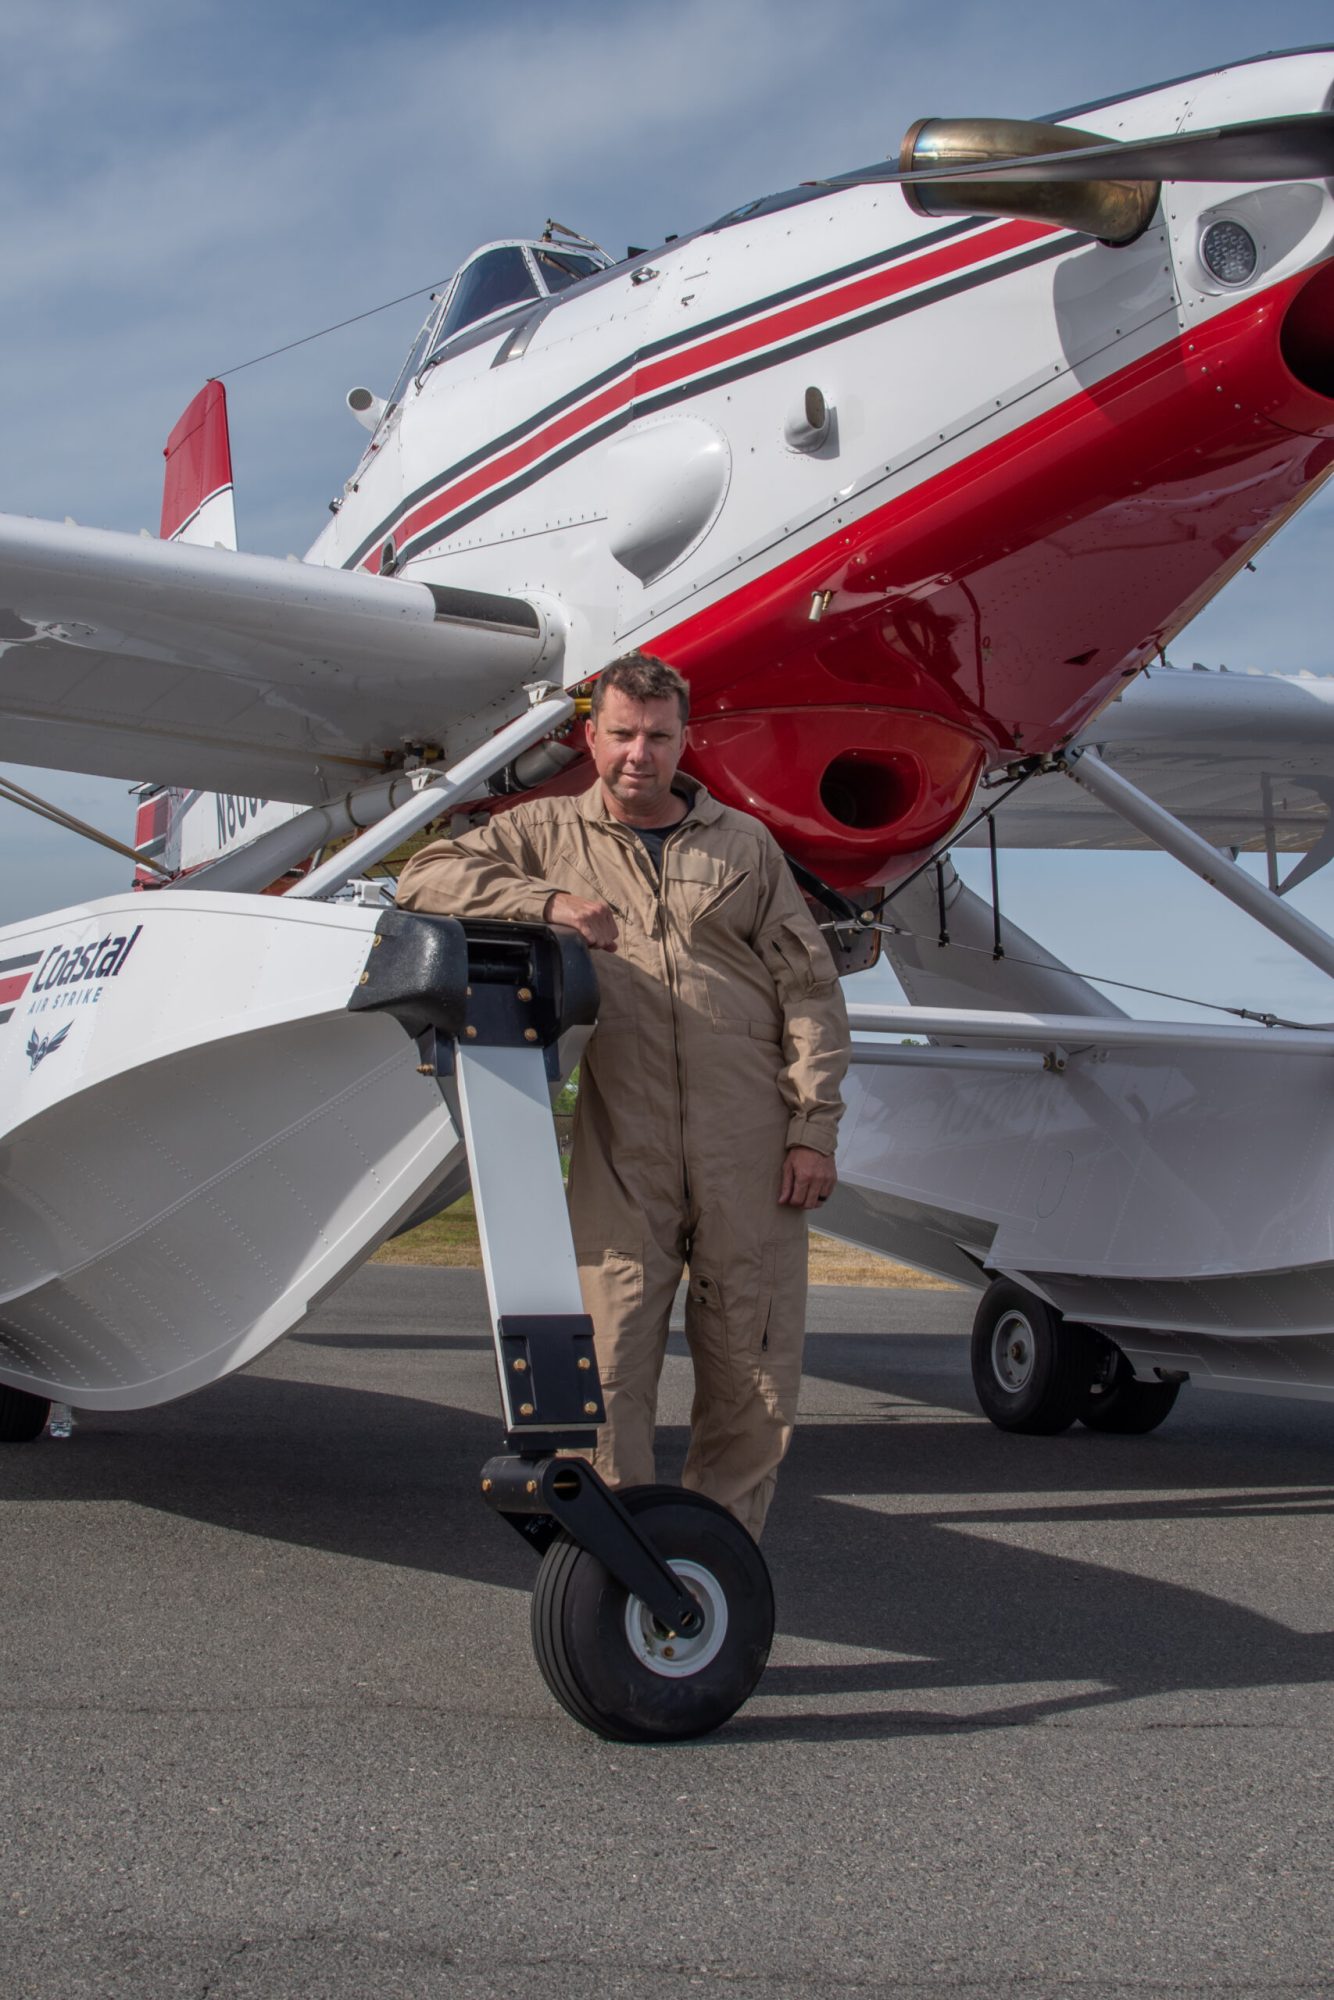 Michael Hutchins, President, with FireBoss. Image courtesy AerialFire Magazine.